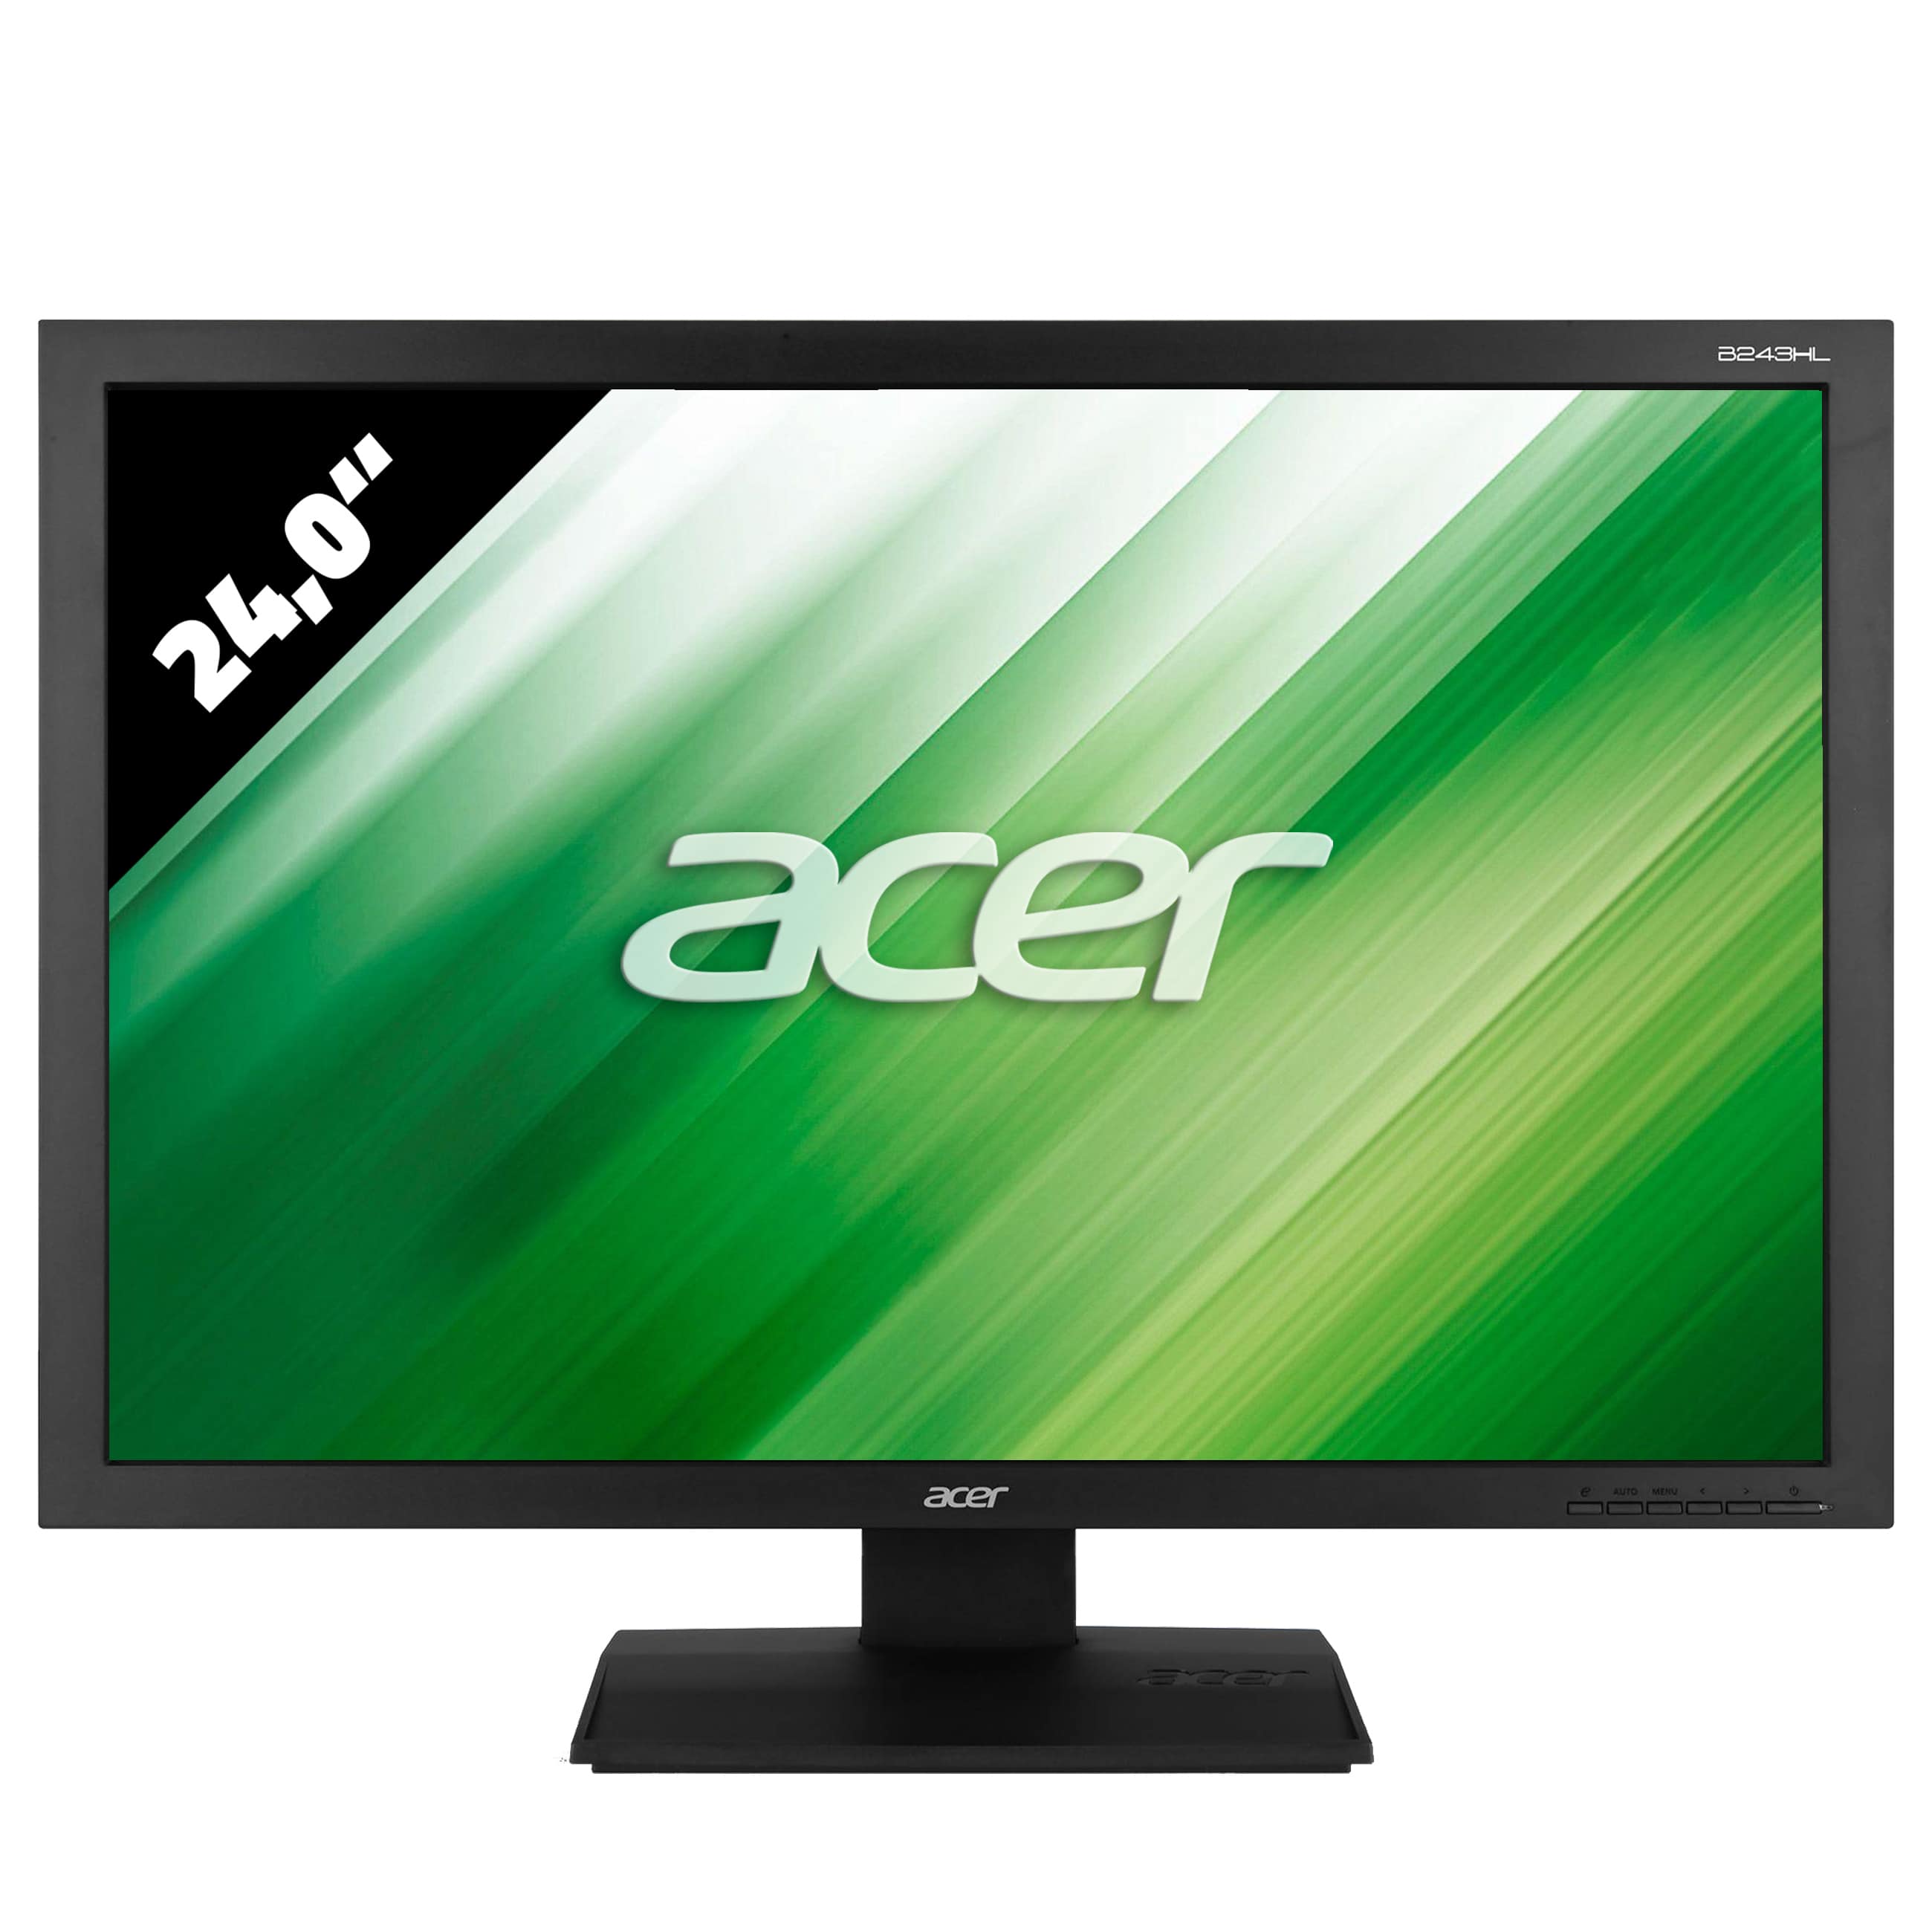 Acer B243HL - 1920 x 1080 - FHD